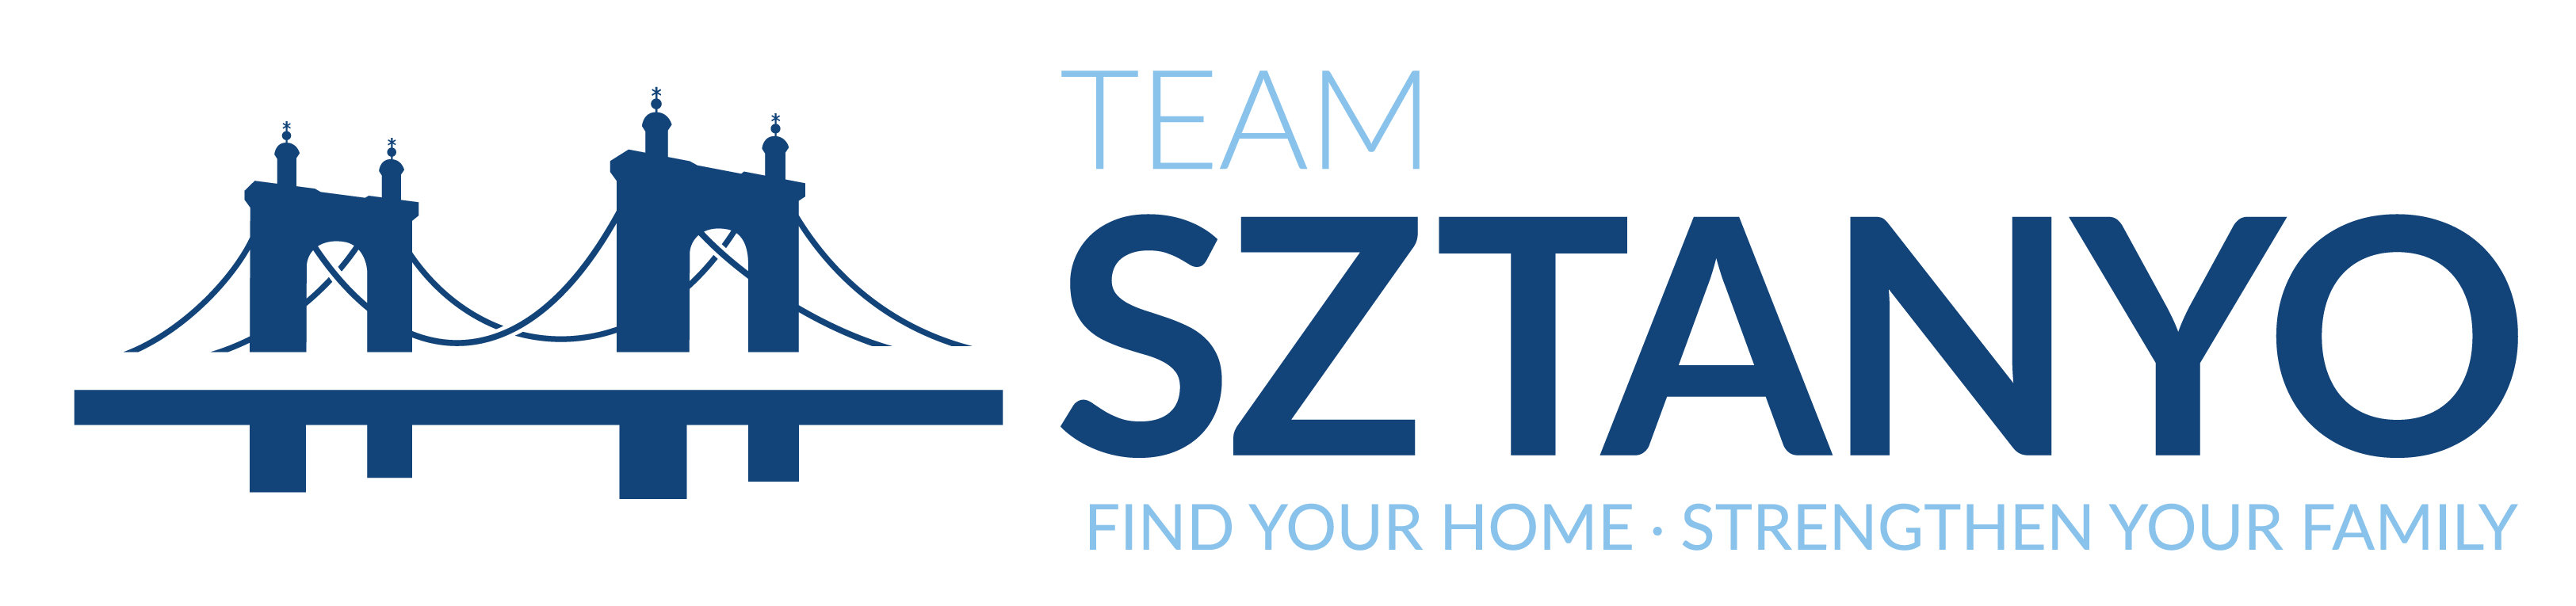 Team Sztanyo | Keller Williams Advisors Realty logo